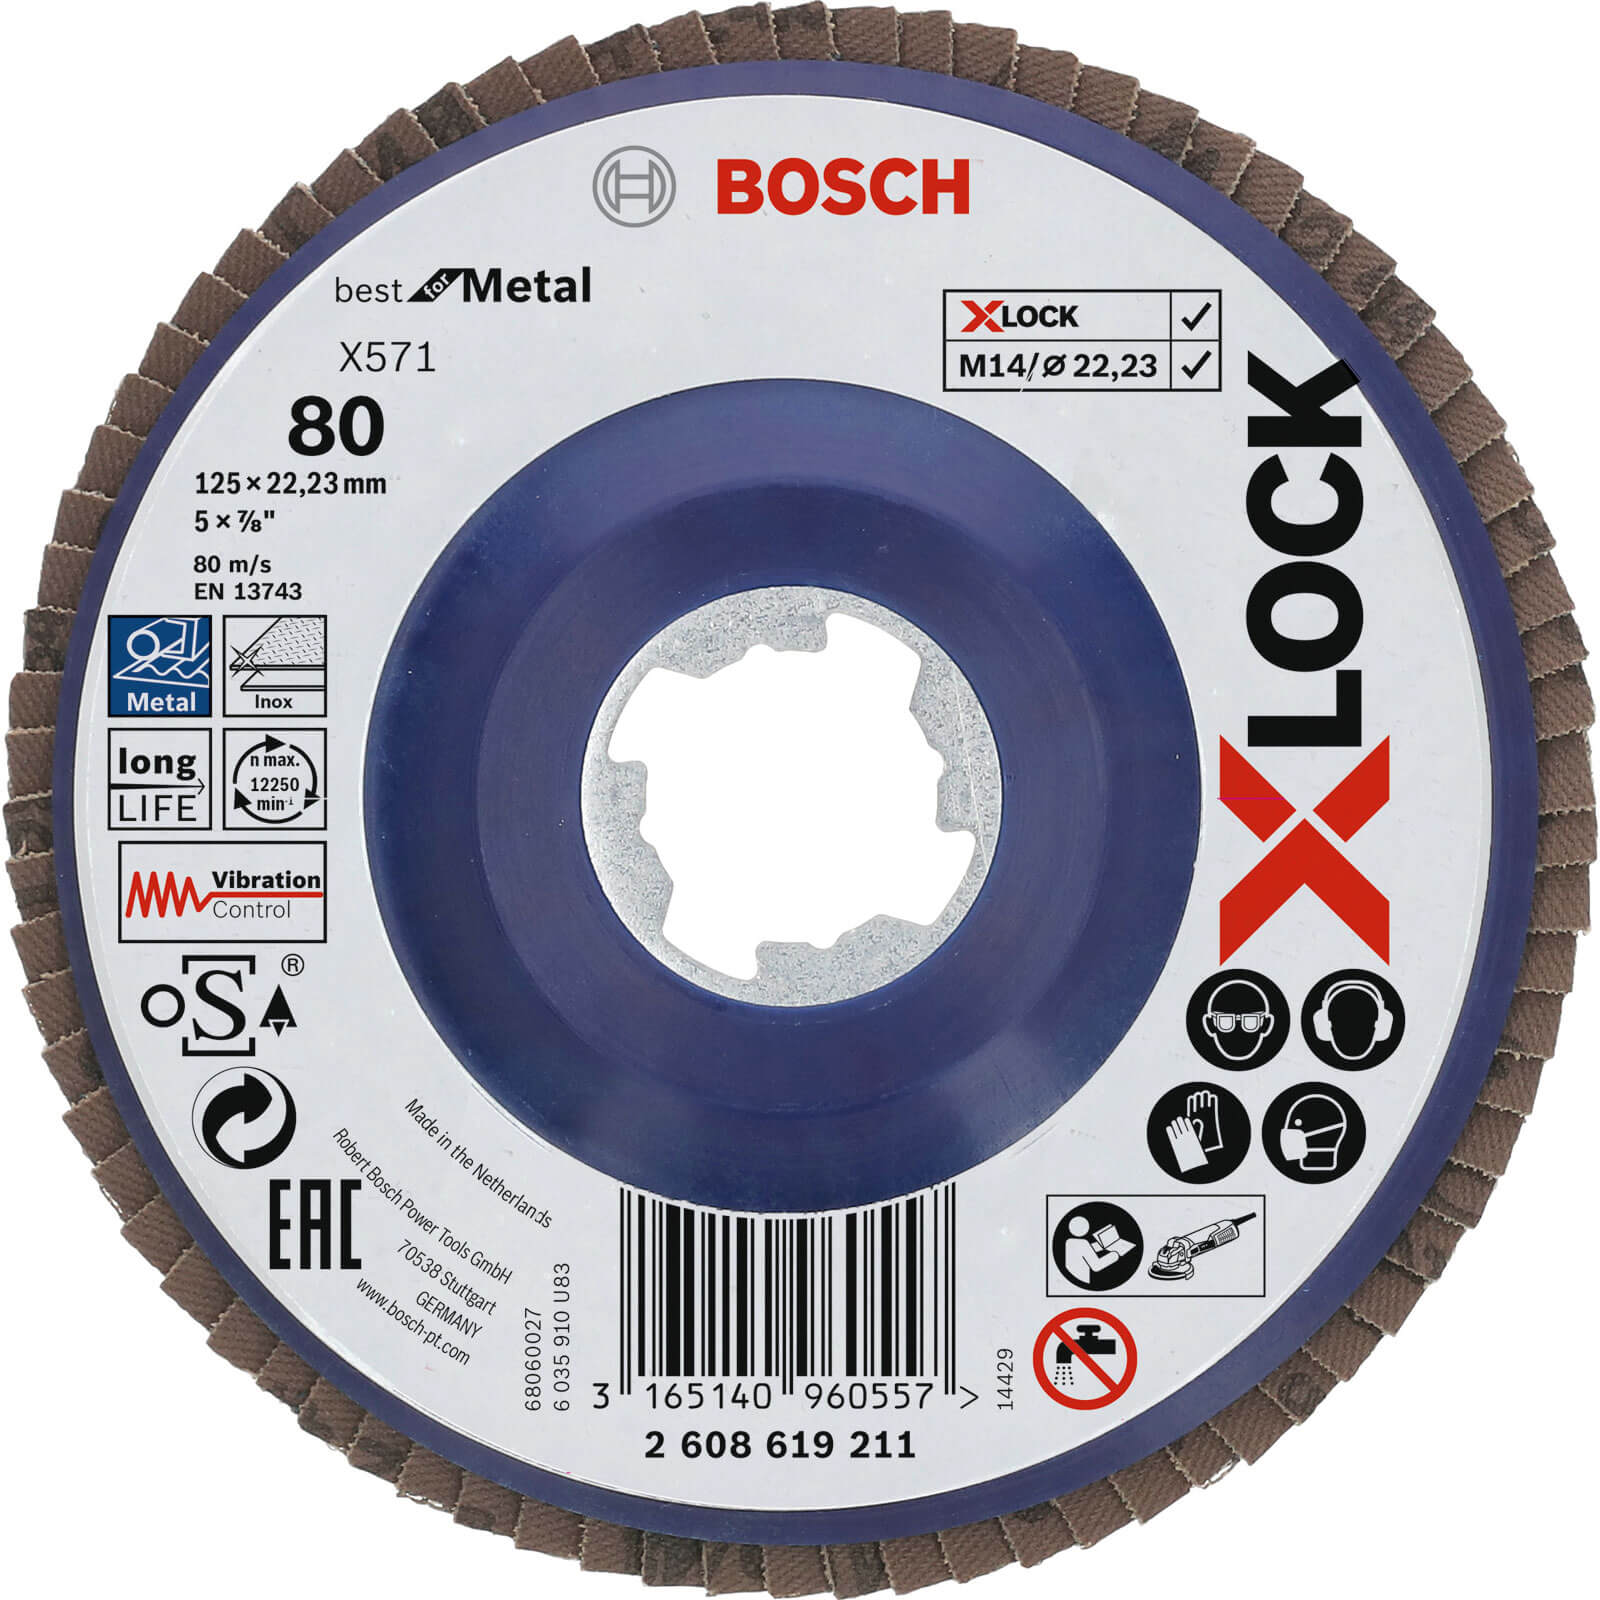 Image of Bosch X Lock Zirconium Abrasive Straight Flap Disc 125mm 80g Pack of 1